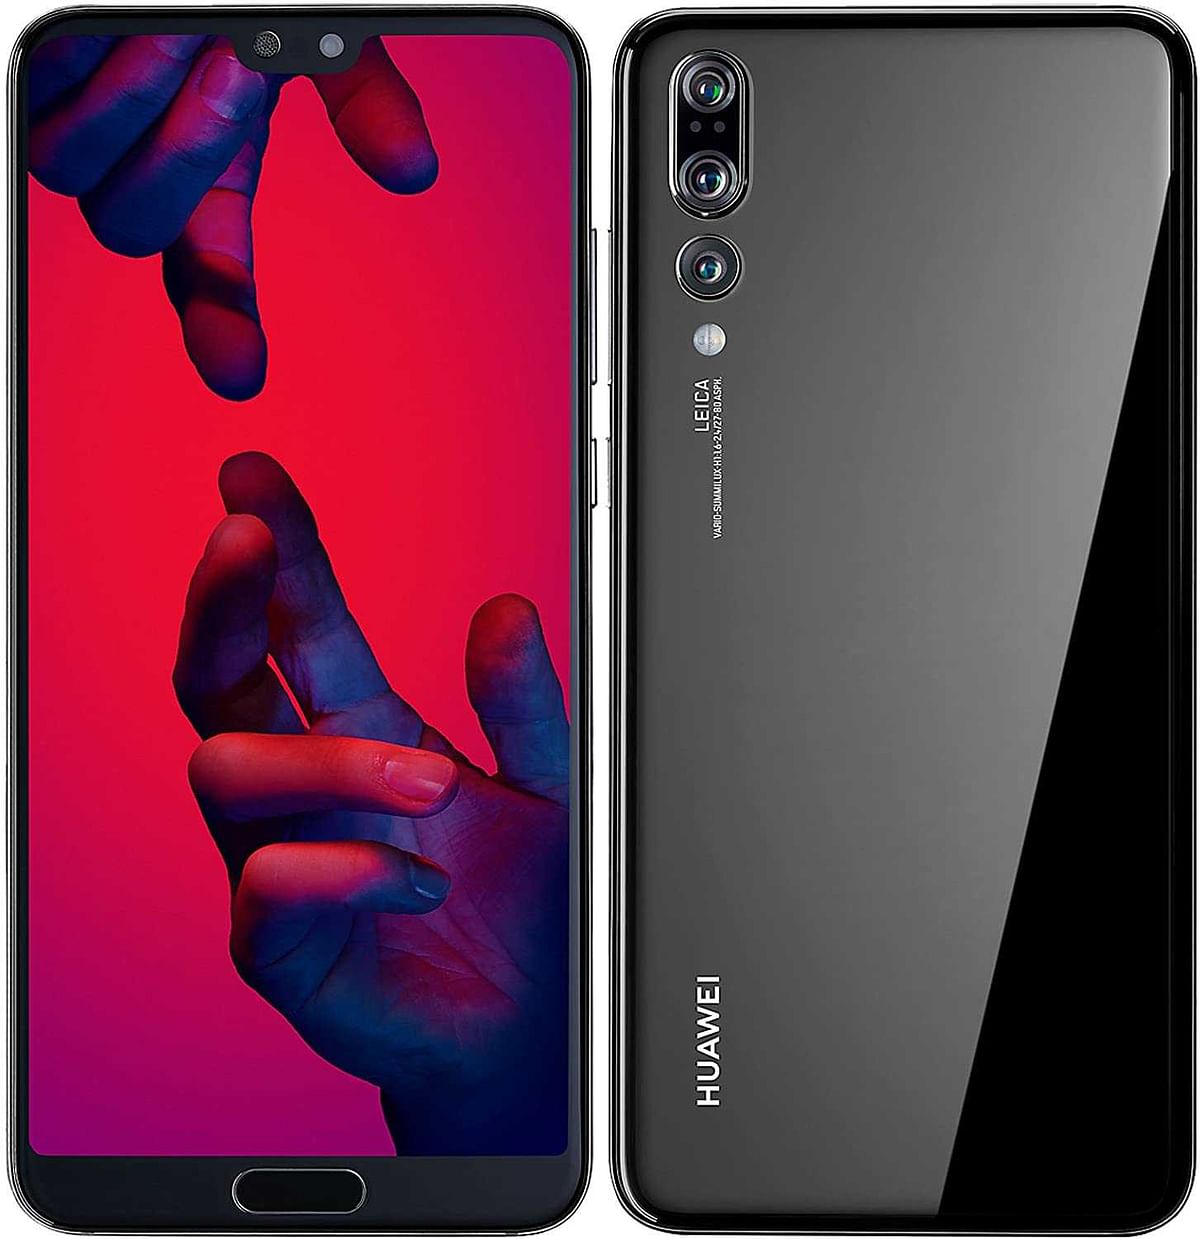 Huawei P20 PRO Single SIM Black 128GB 4G LTE